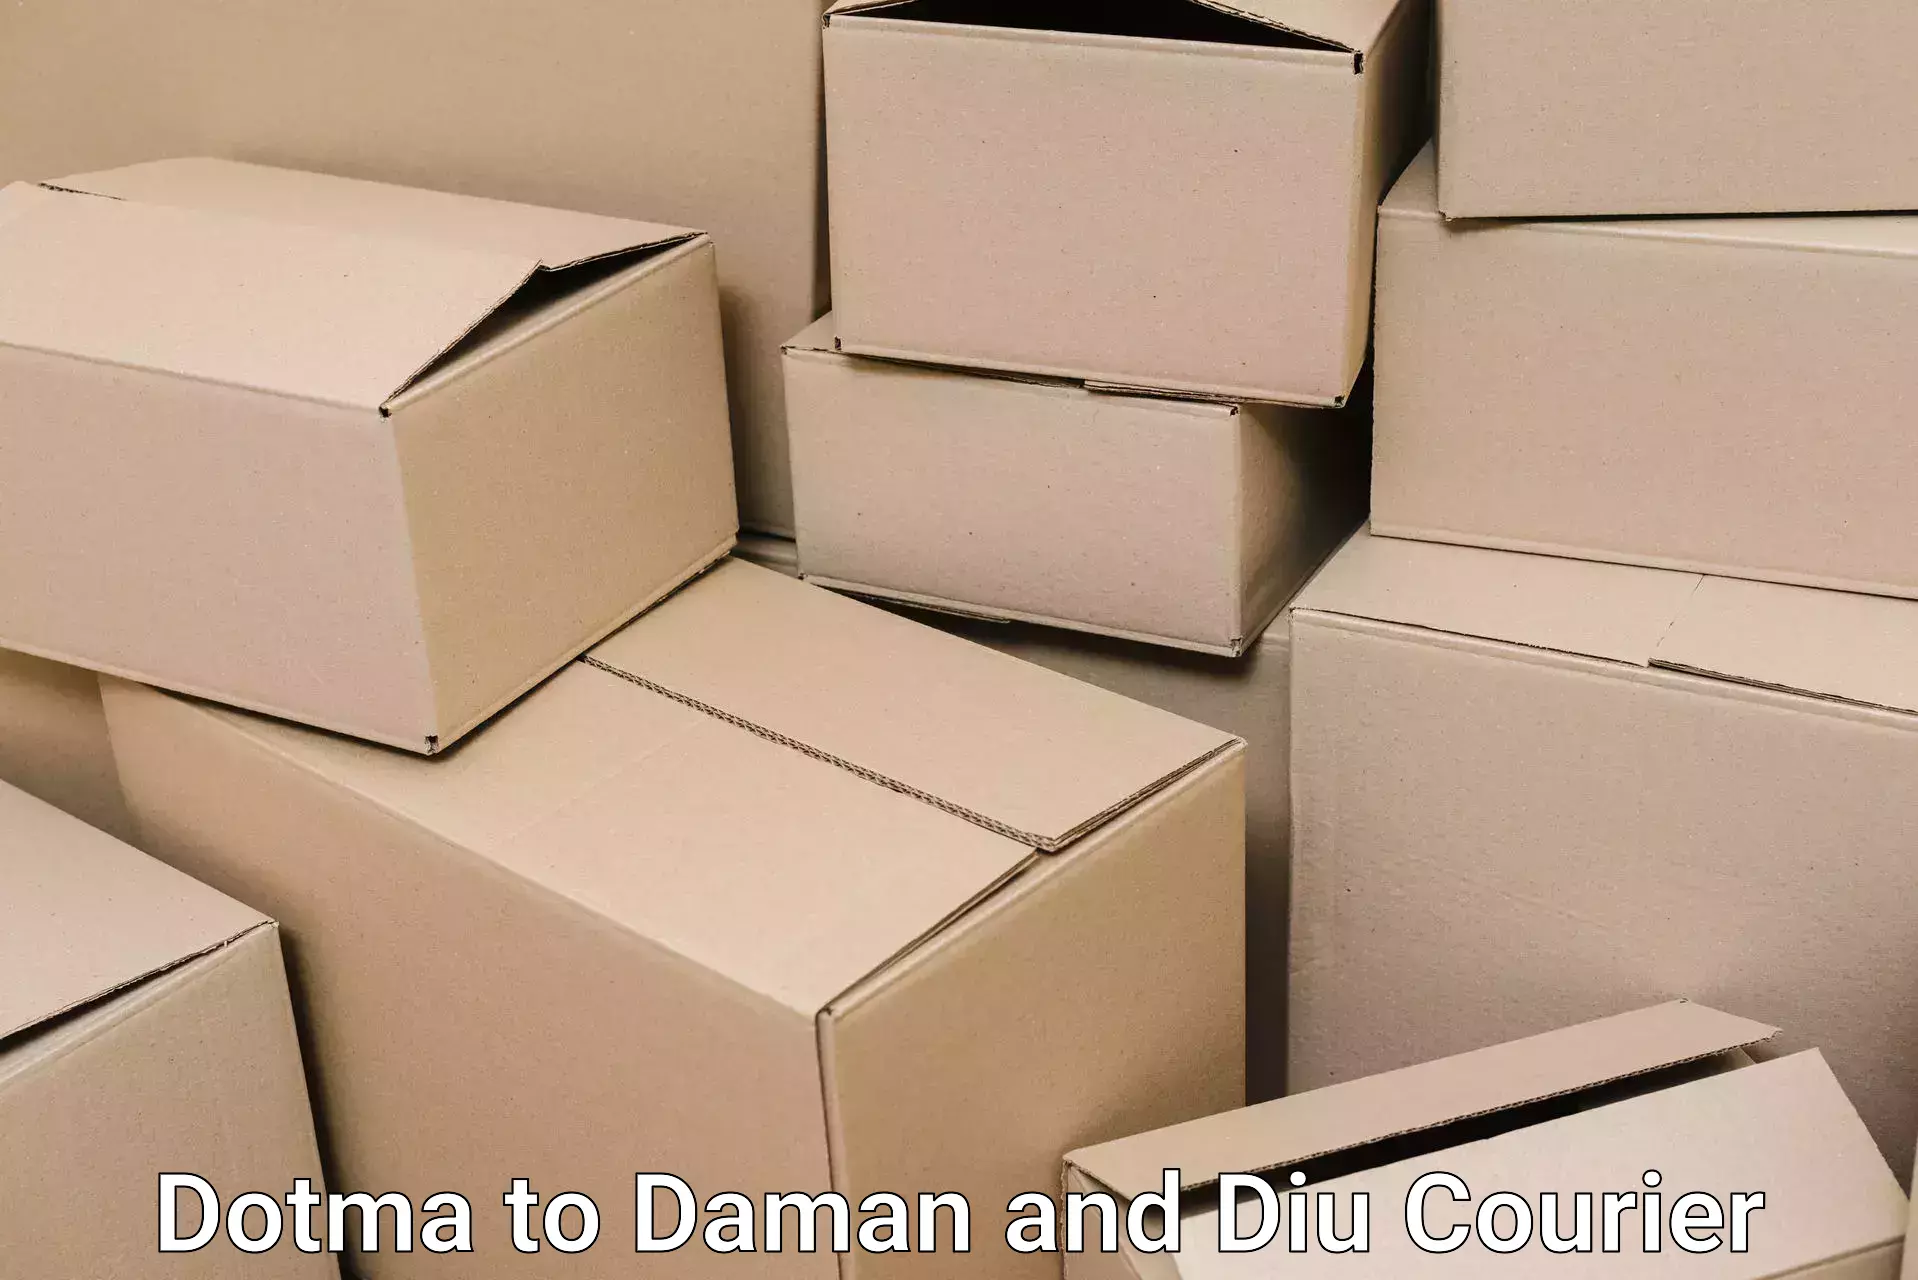 Professional moving company Dotma to Diu